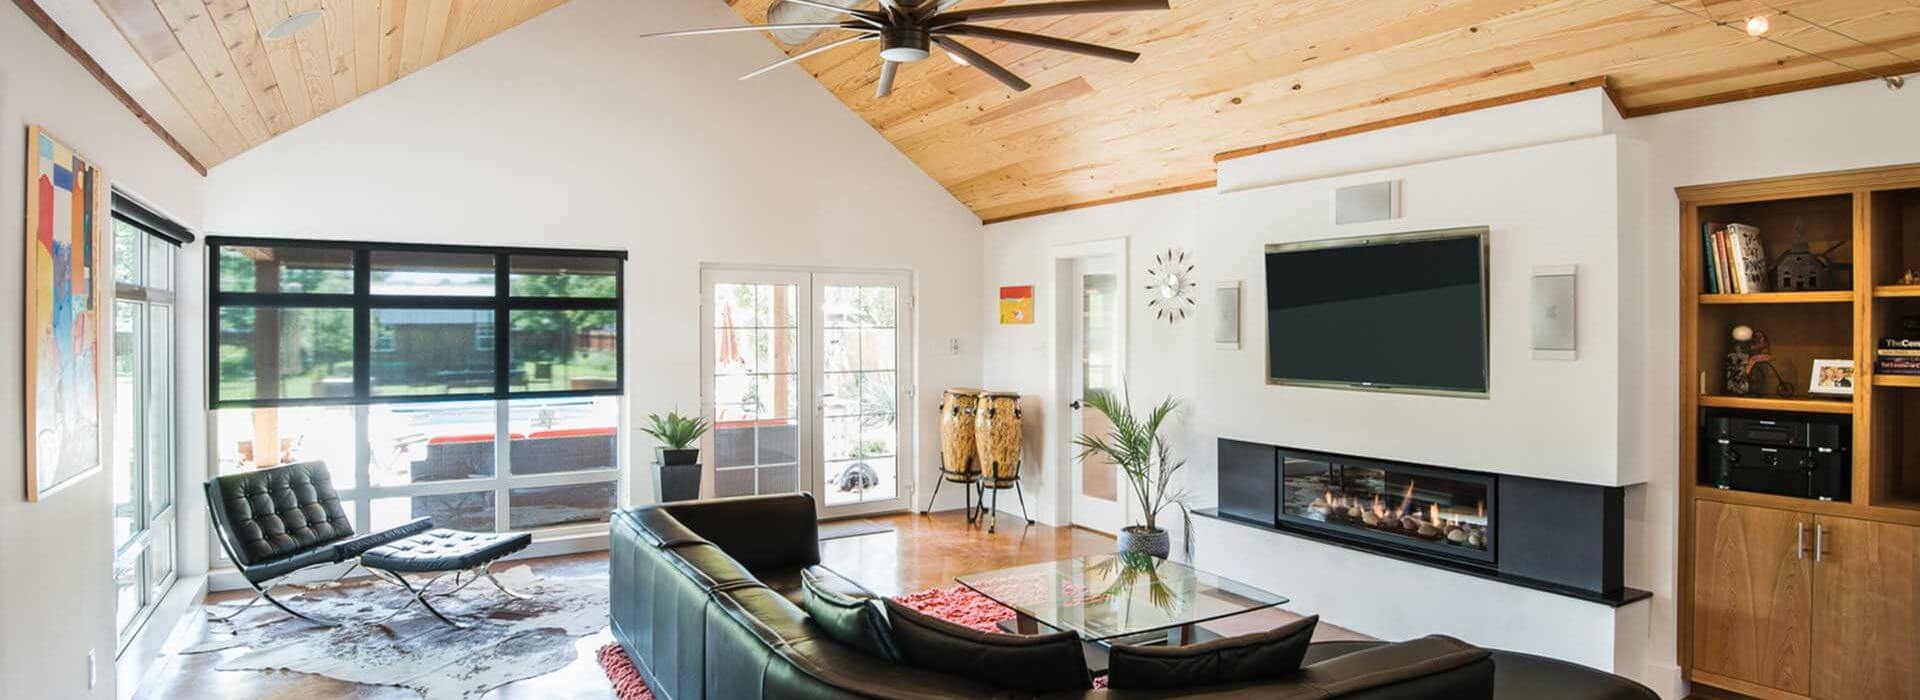 Modern Home Interior in Texas